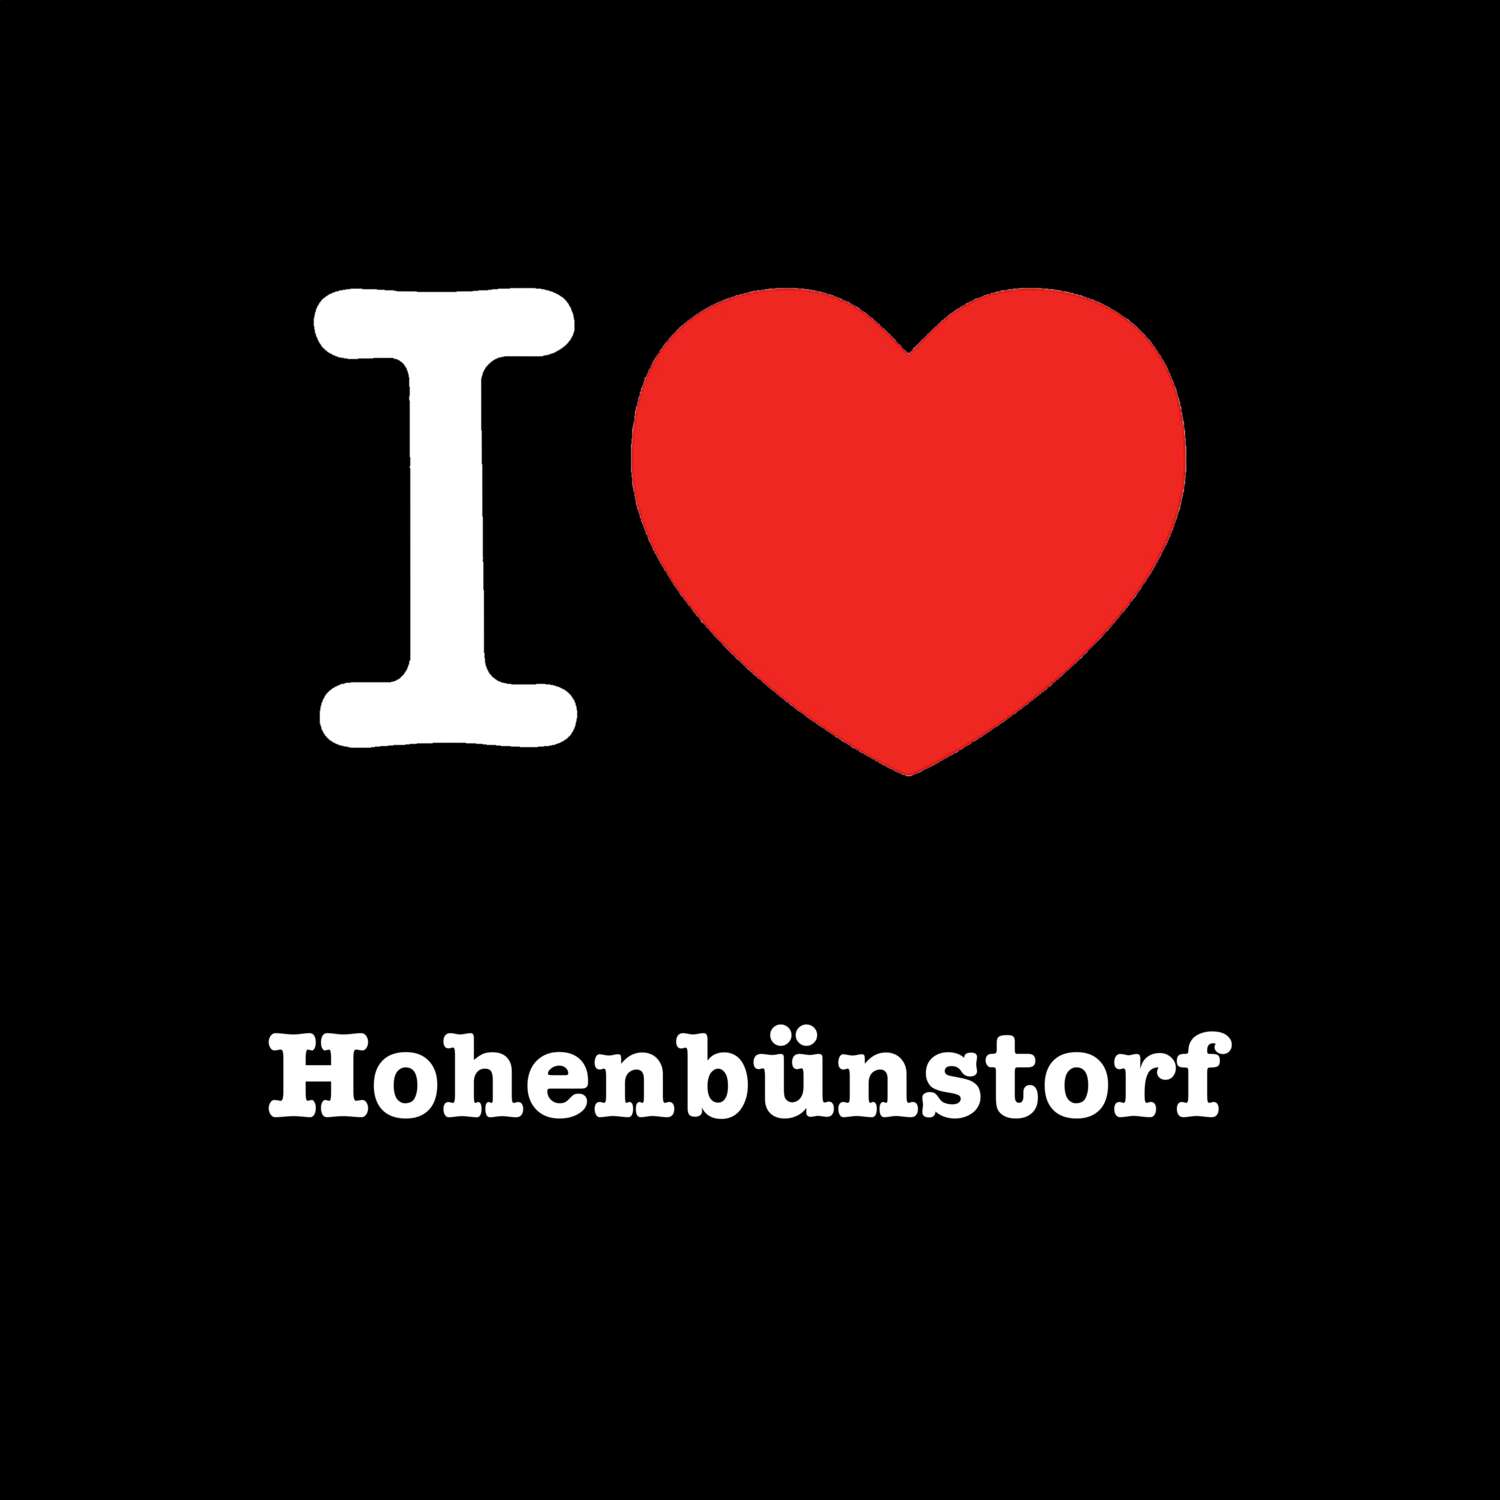 Hohenbünstorf T-Shirt »I love«